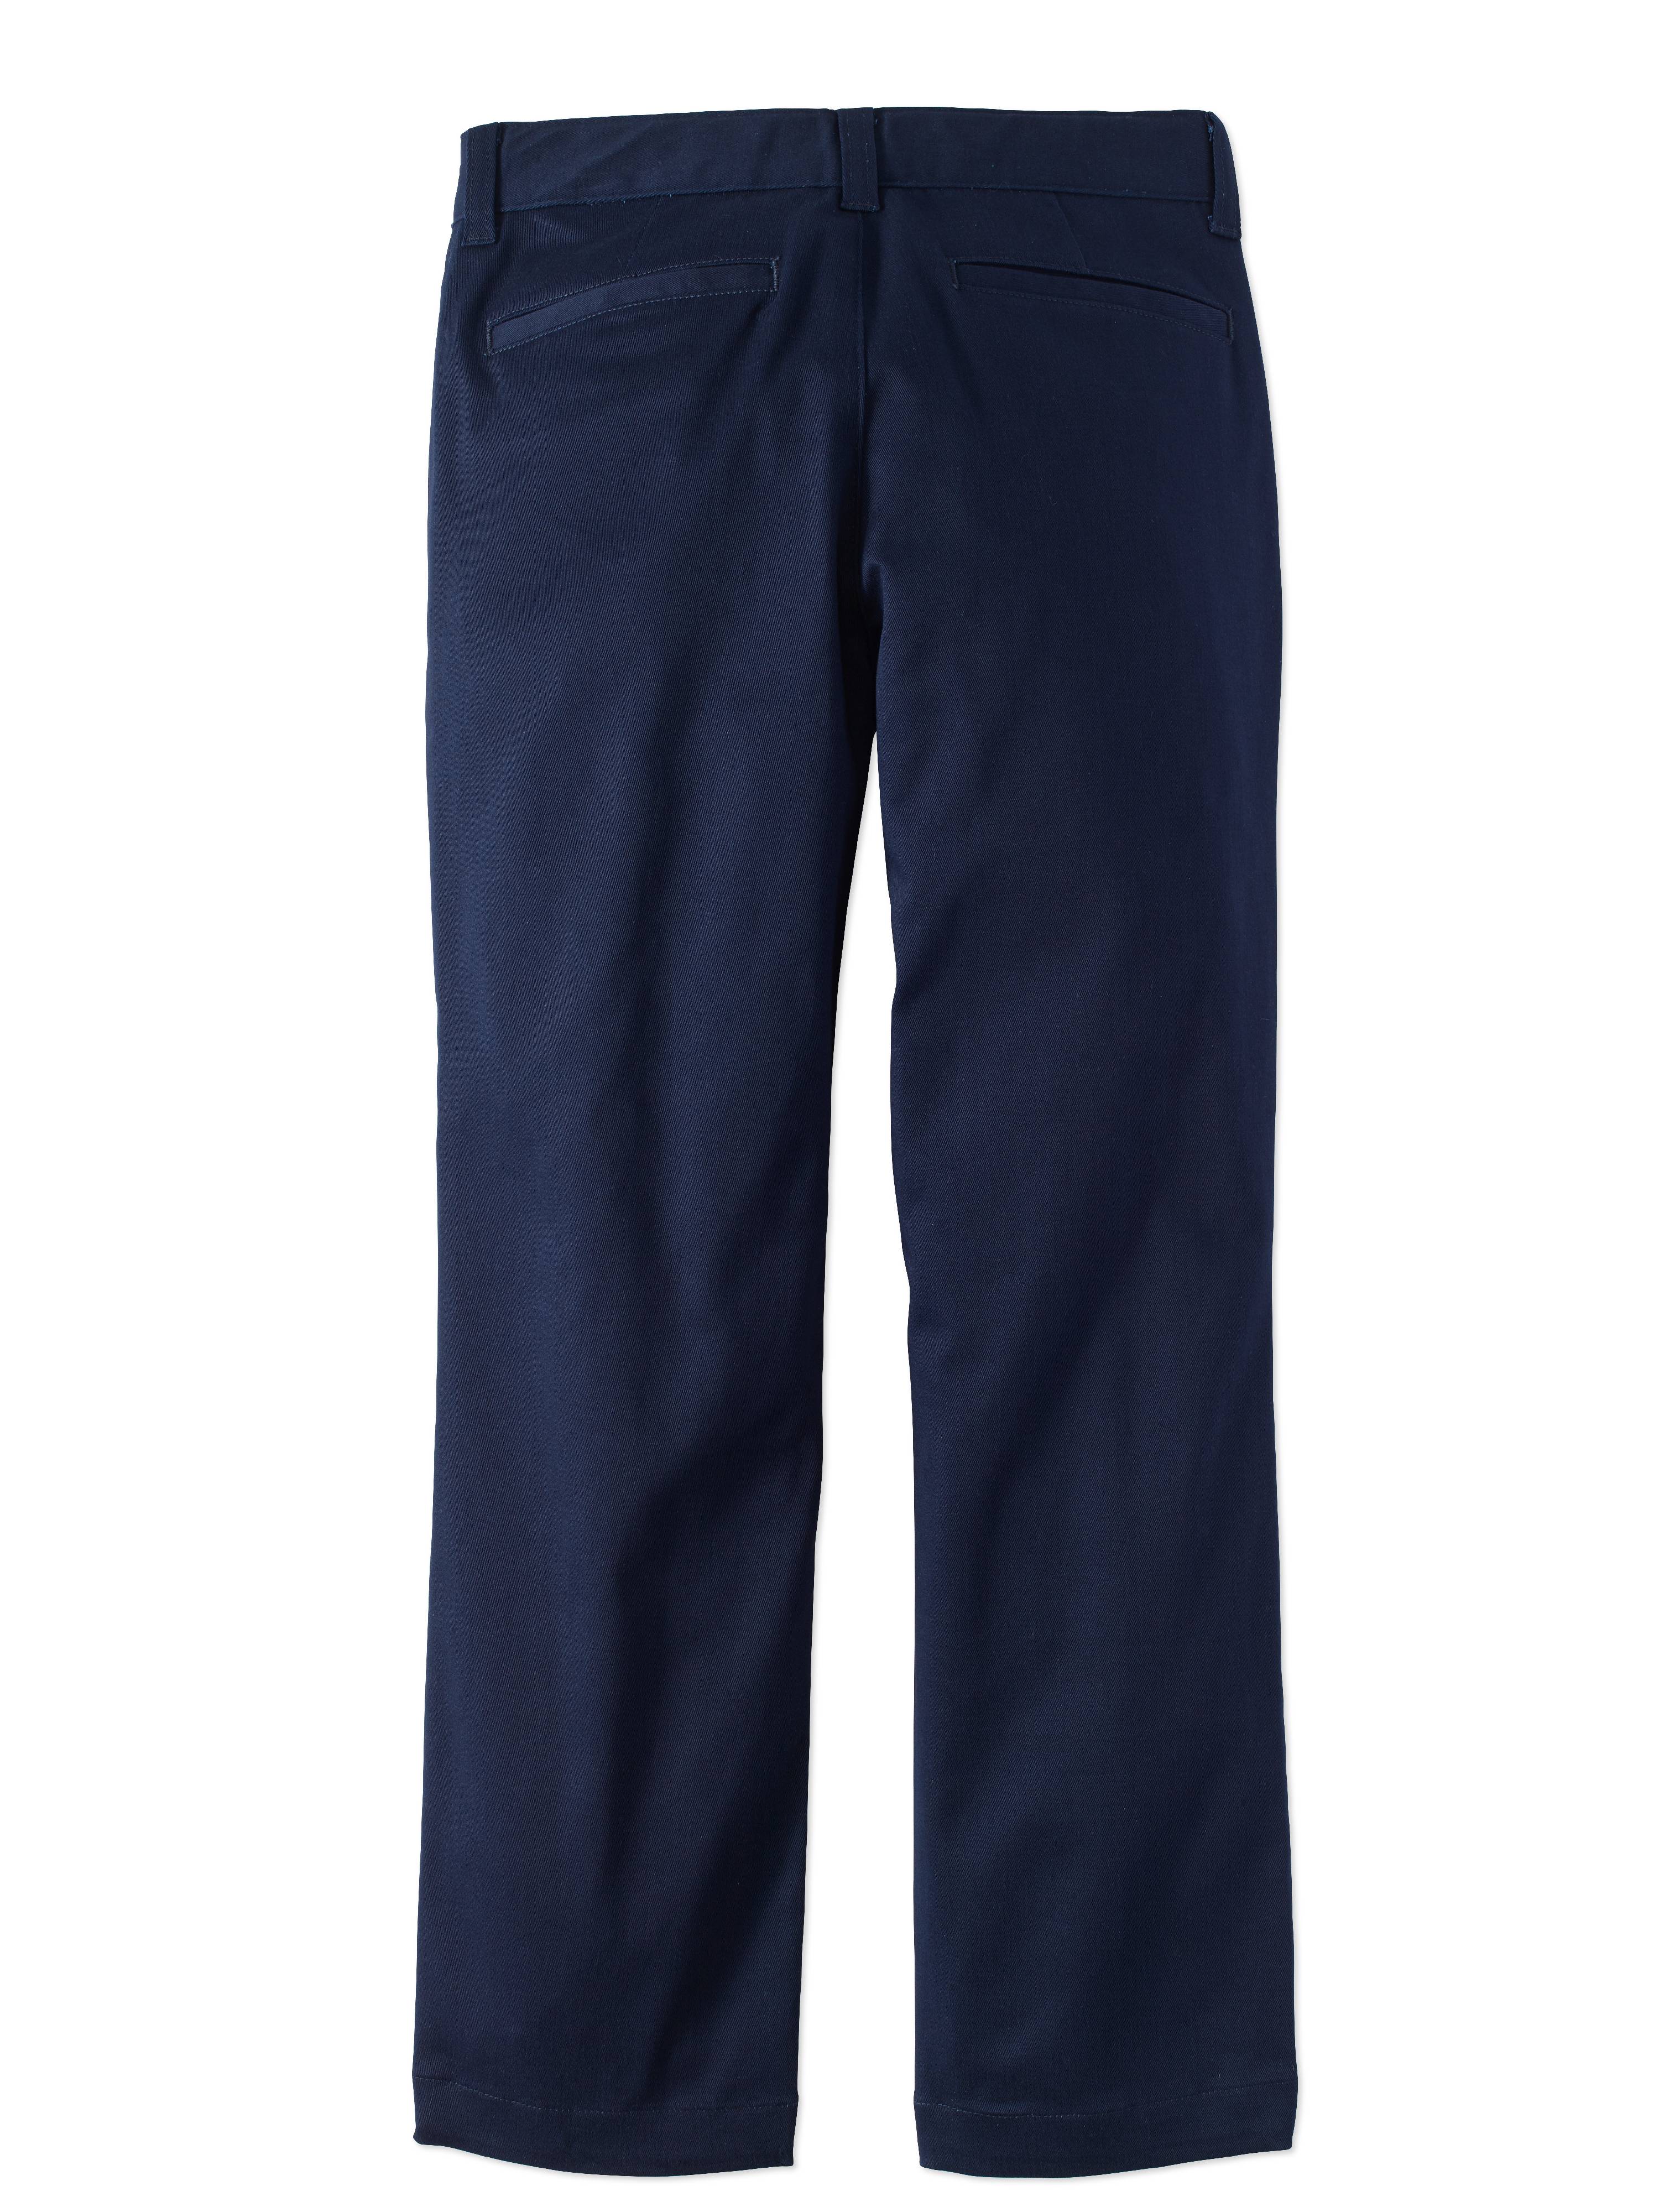 Wonder Nation Boys School Uniform Super Soft Stretch Twill Flat Front Pants, Sizes 4-22, Slim, & Husky - image 2 of 2